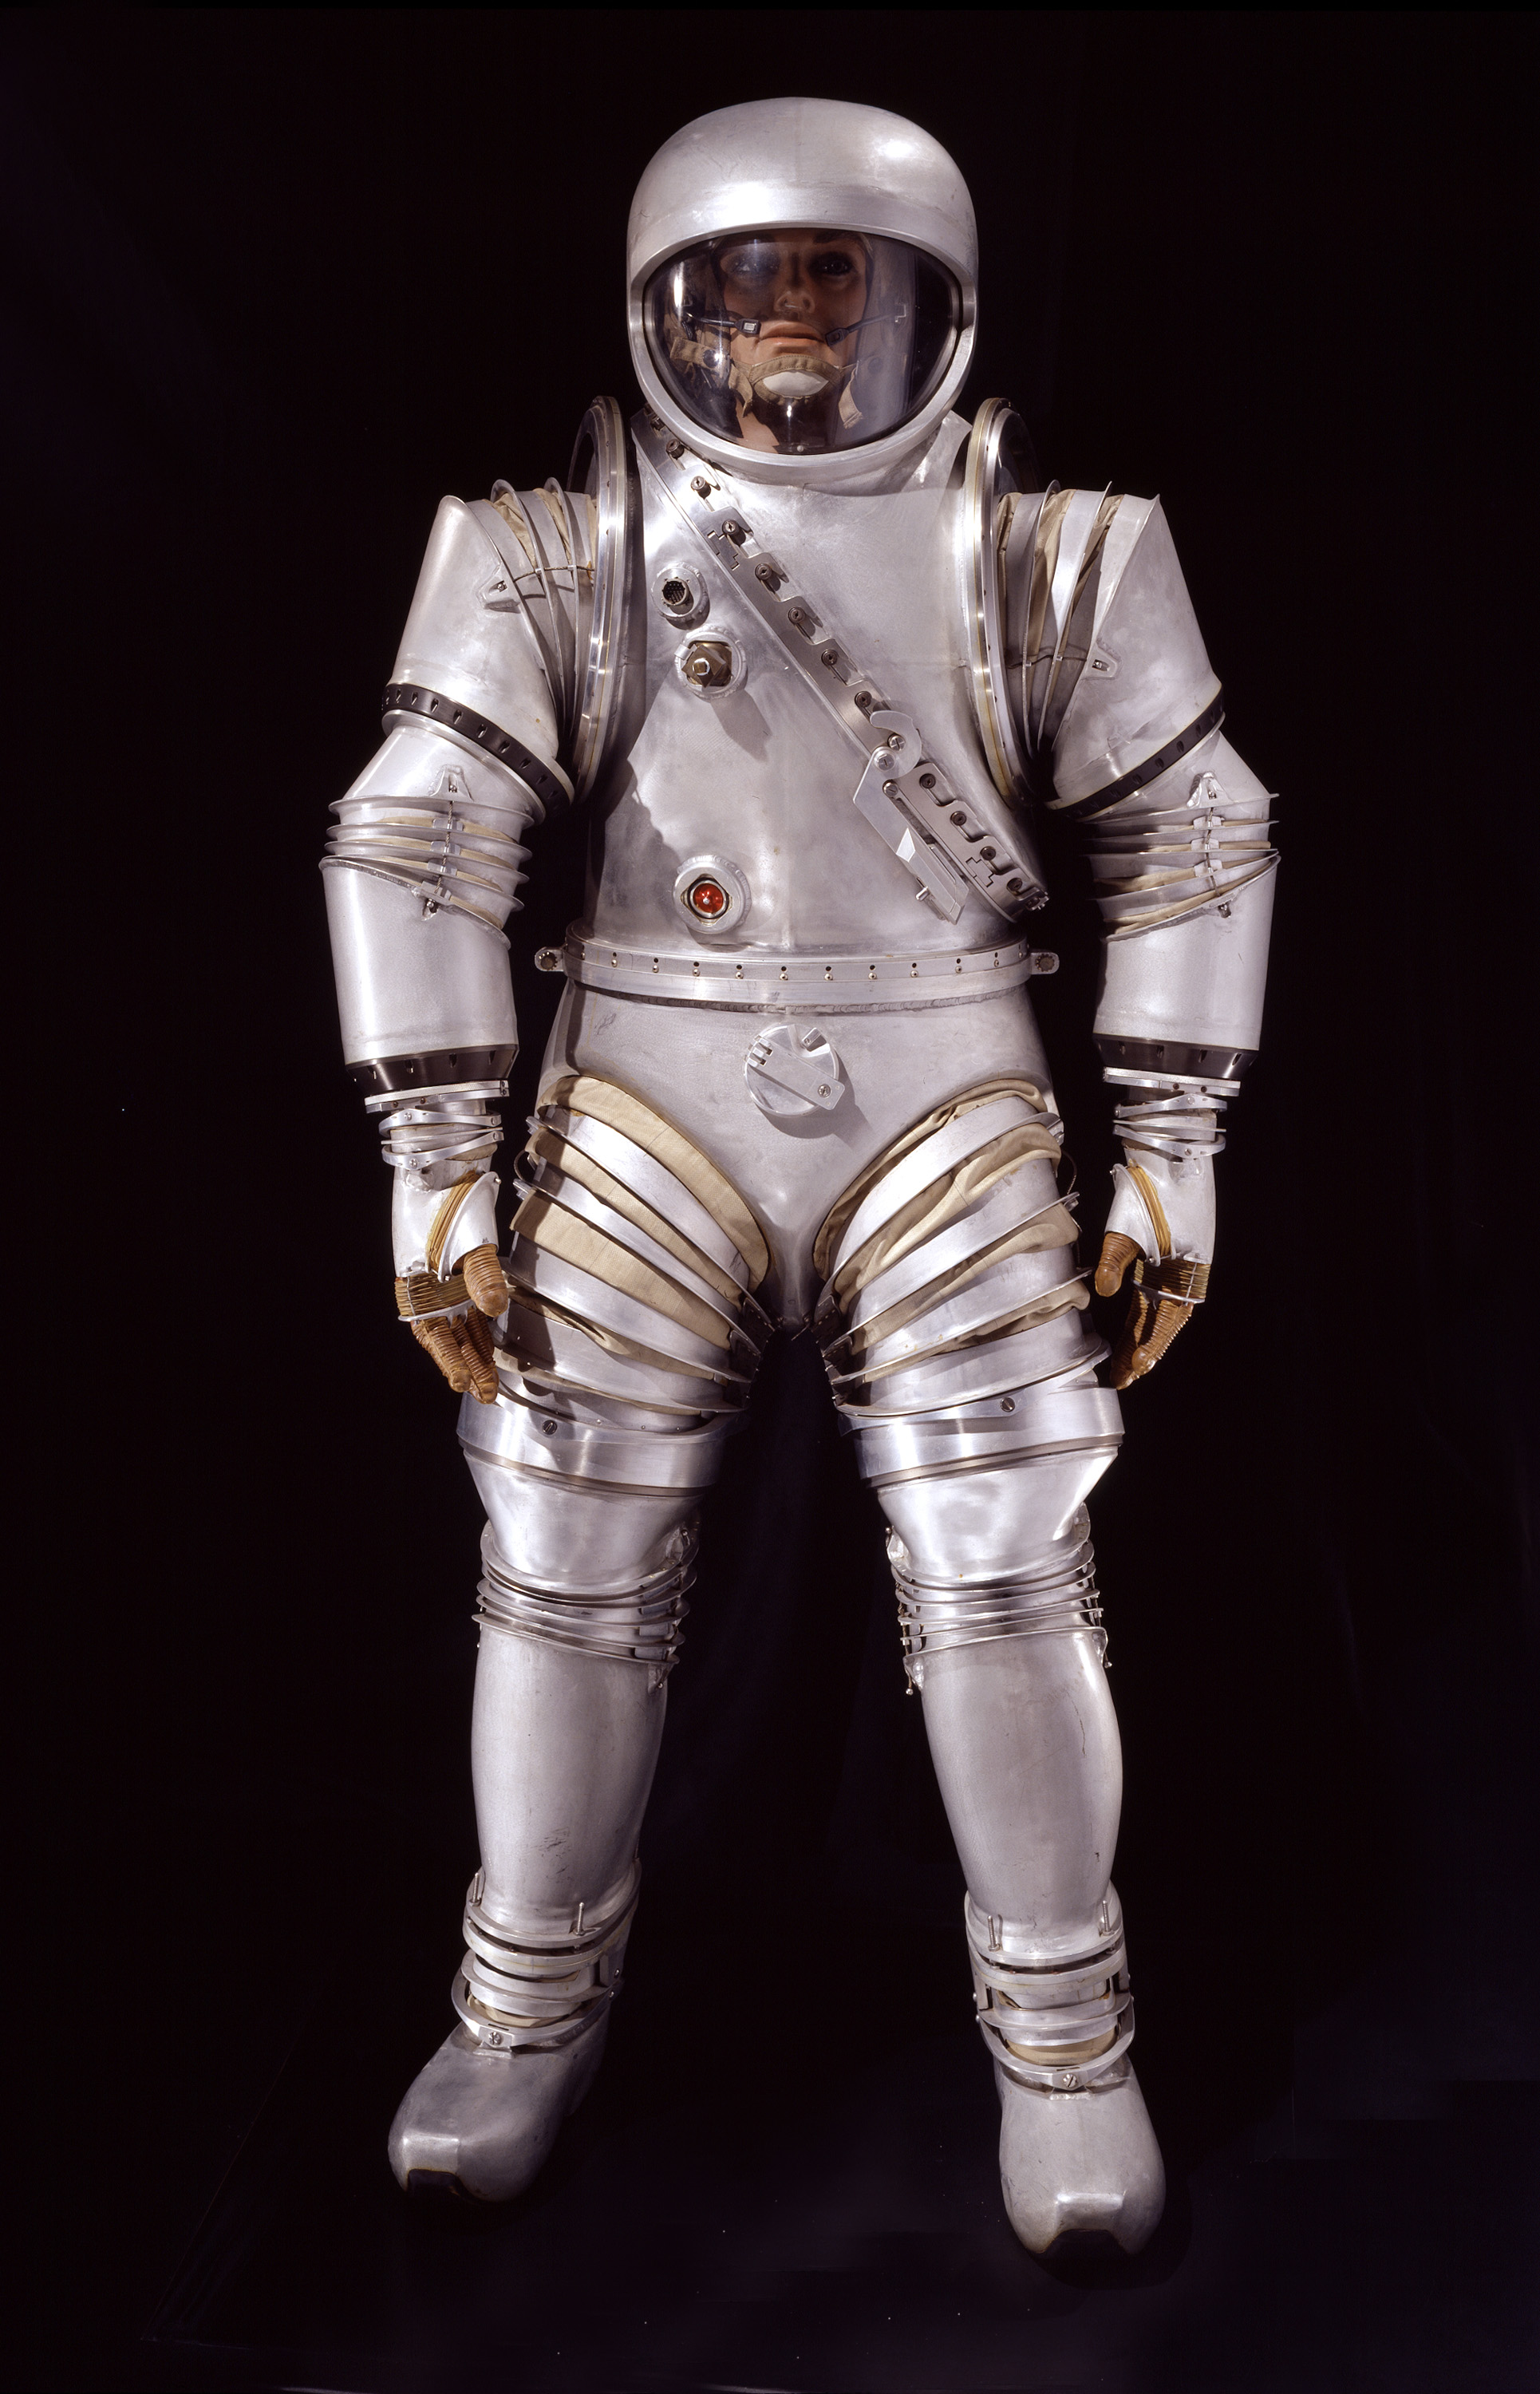 Найти скафандр. RX-2a скафандр. Скафандр Орлан. Скафандр Космонавта. Космический костюм.